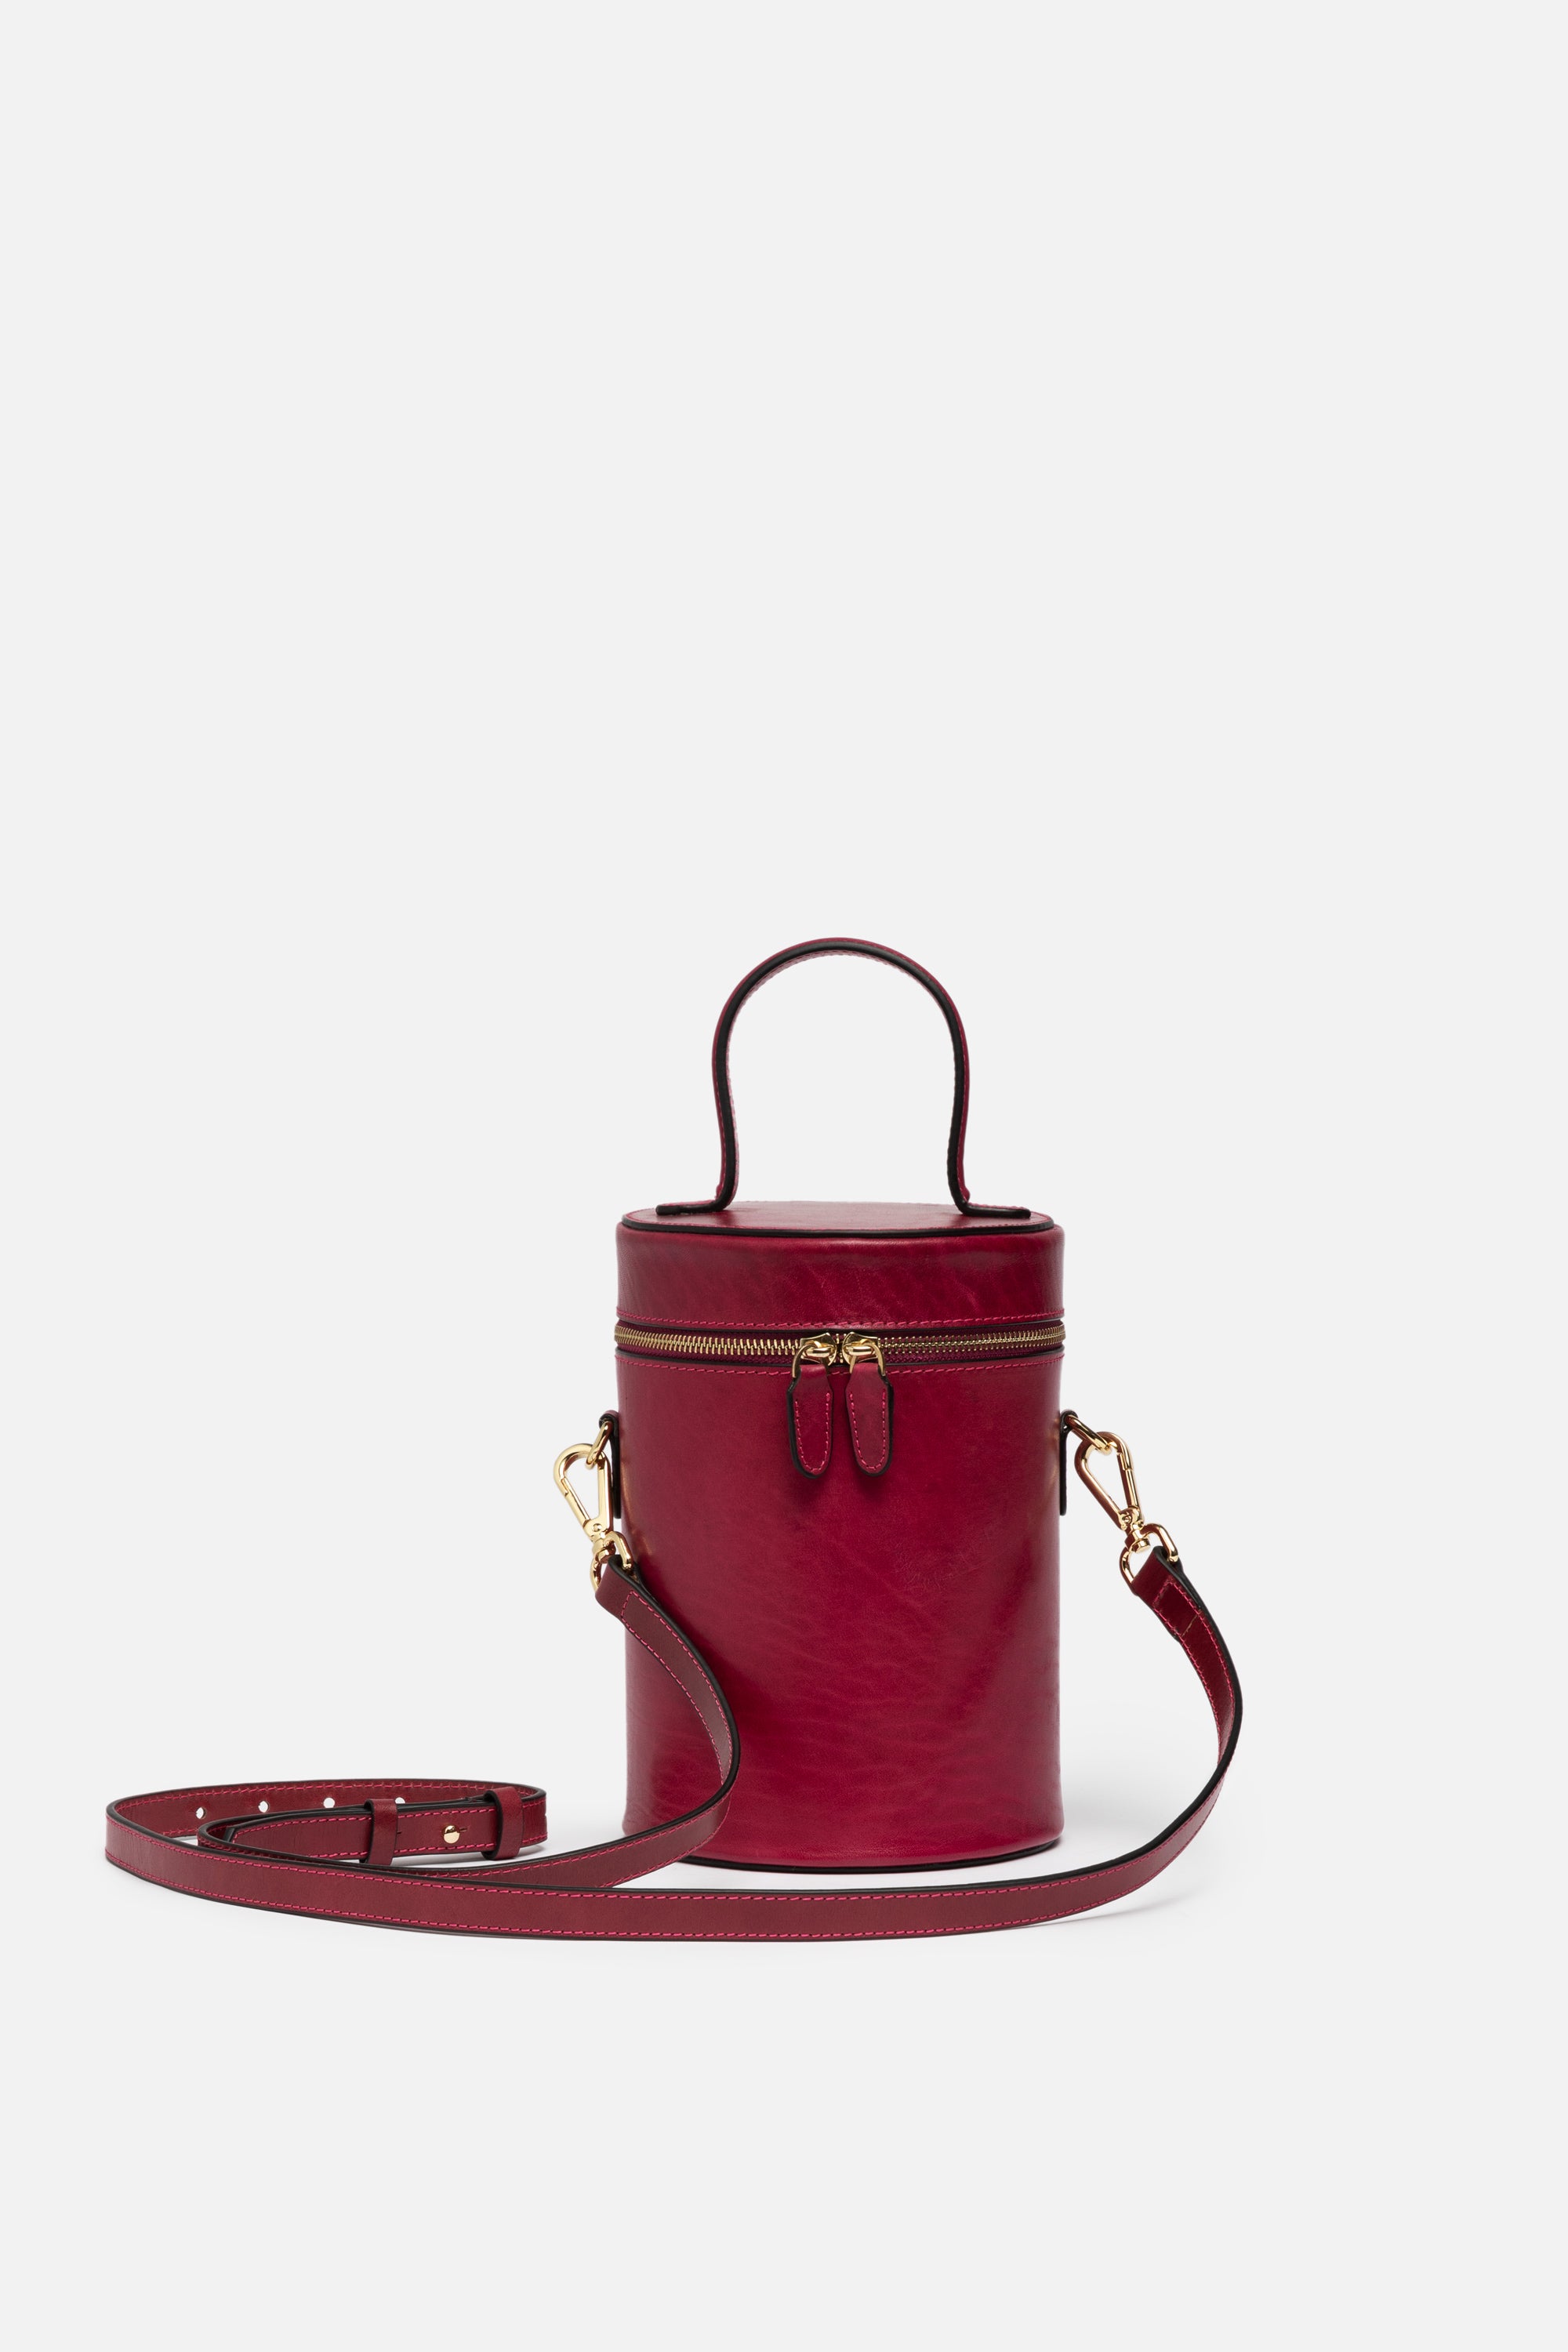 NOLA Bucket Leather Bag in Sangria Red | Silver & Riley